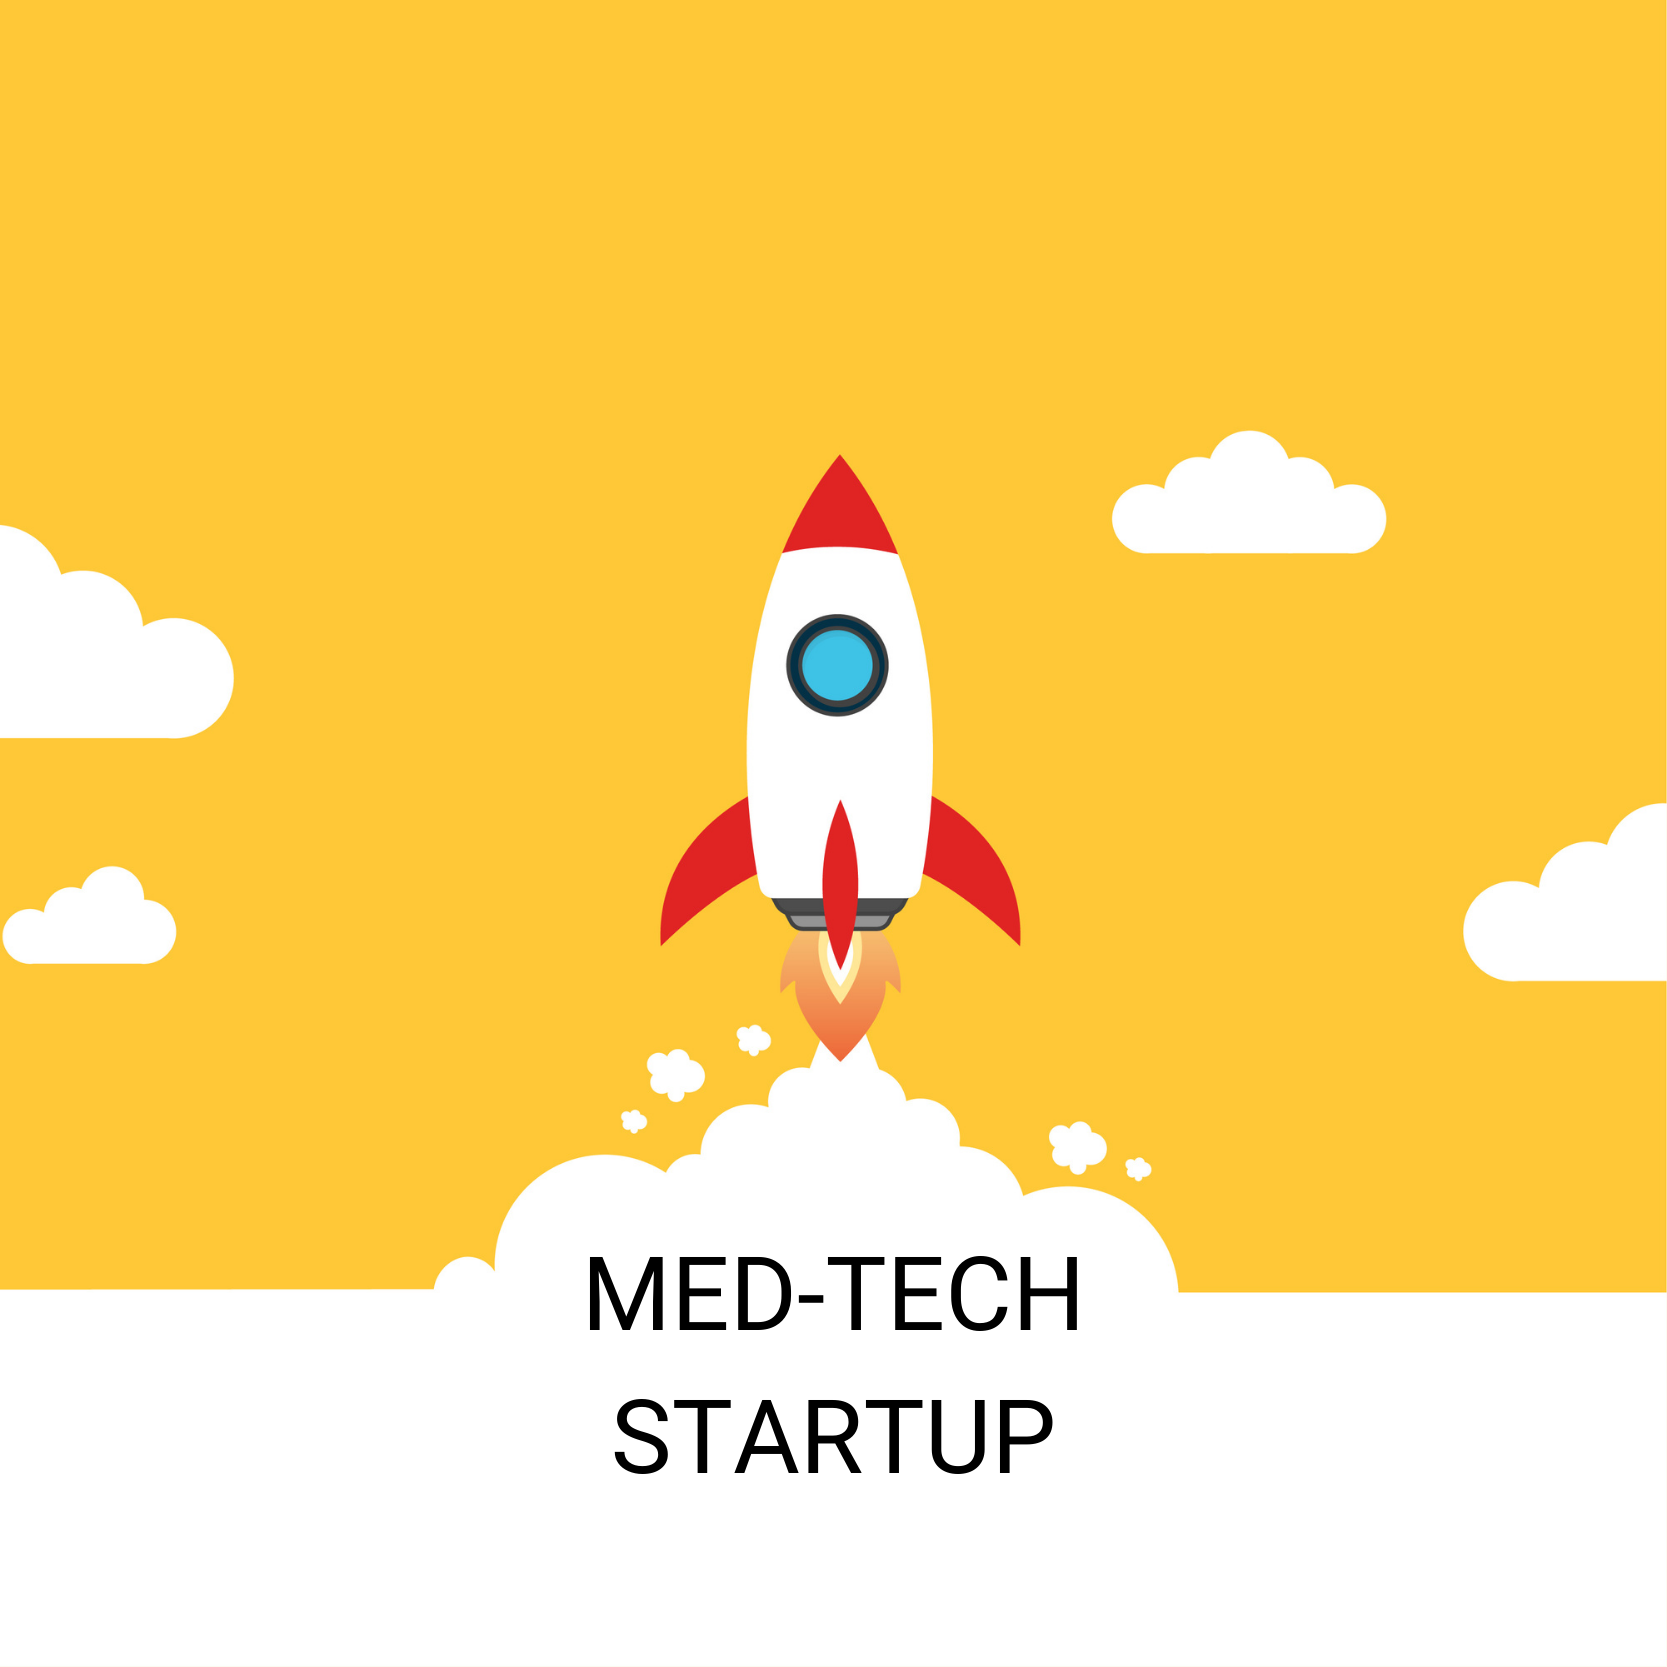 Medical Device start-up